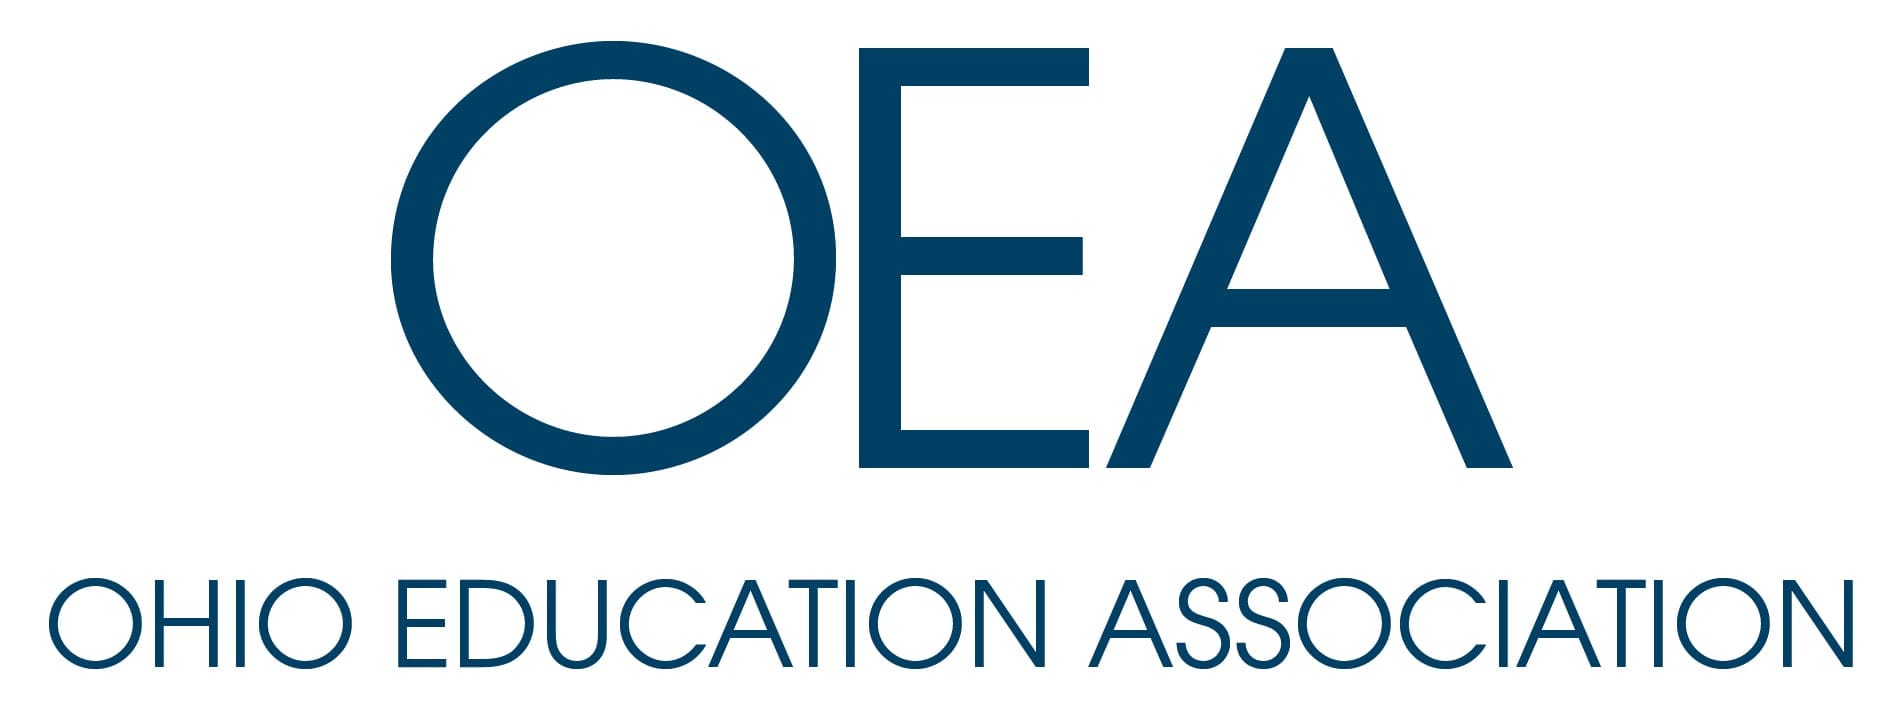 Ohio Education Association Logo